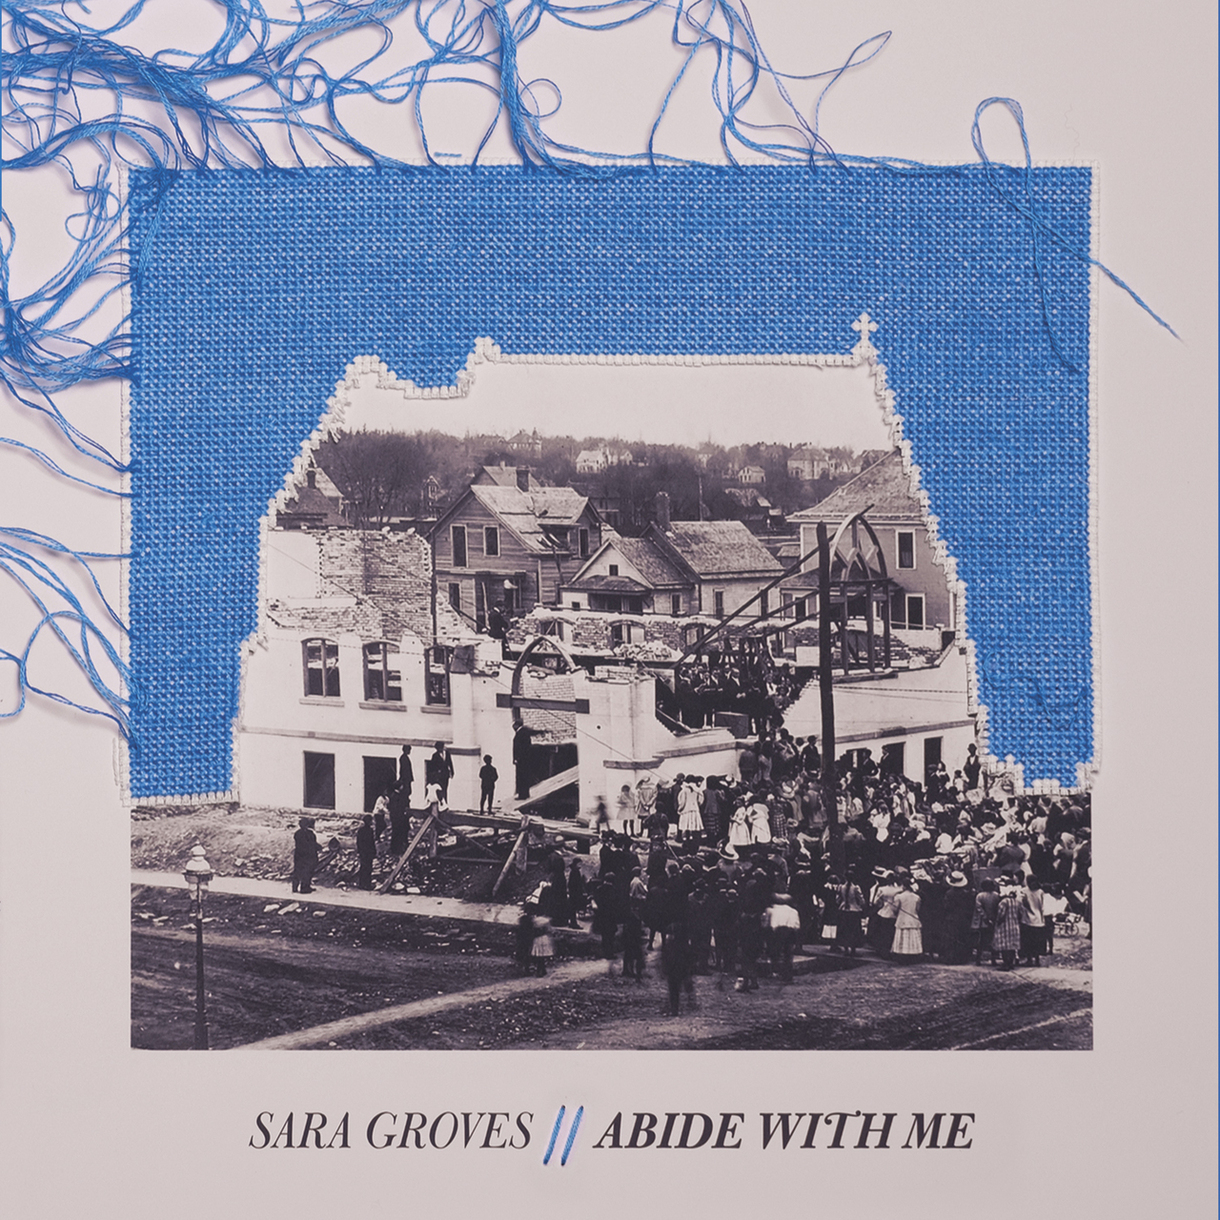 Sara Groves - Abide With Me